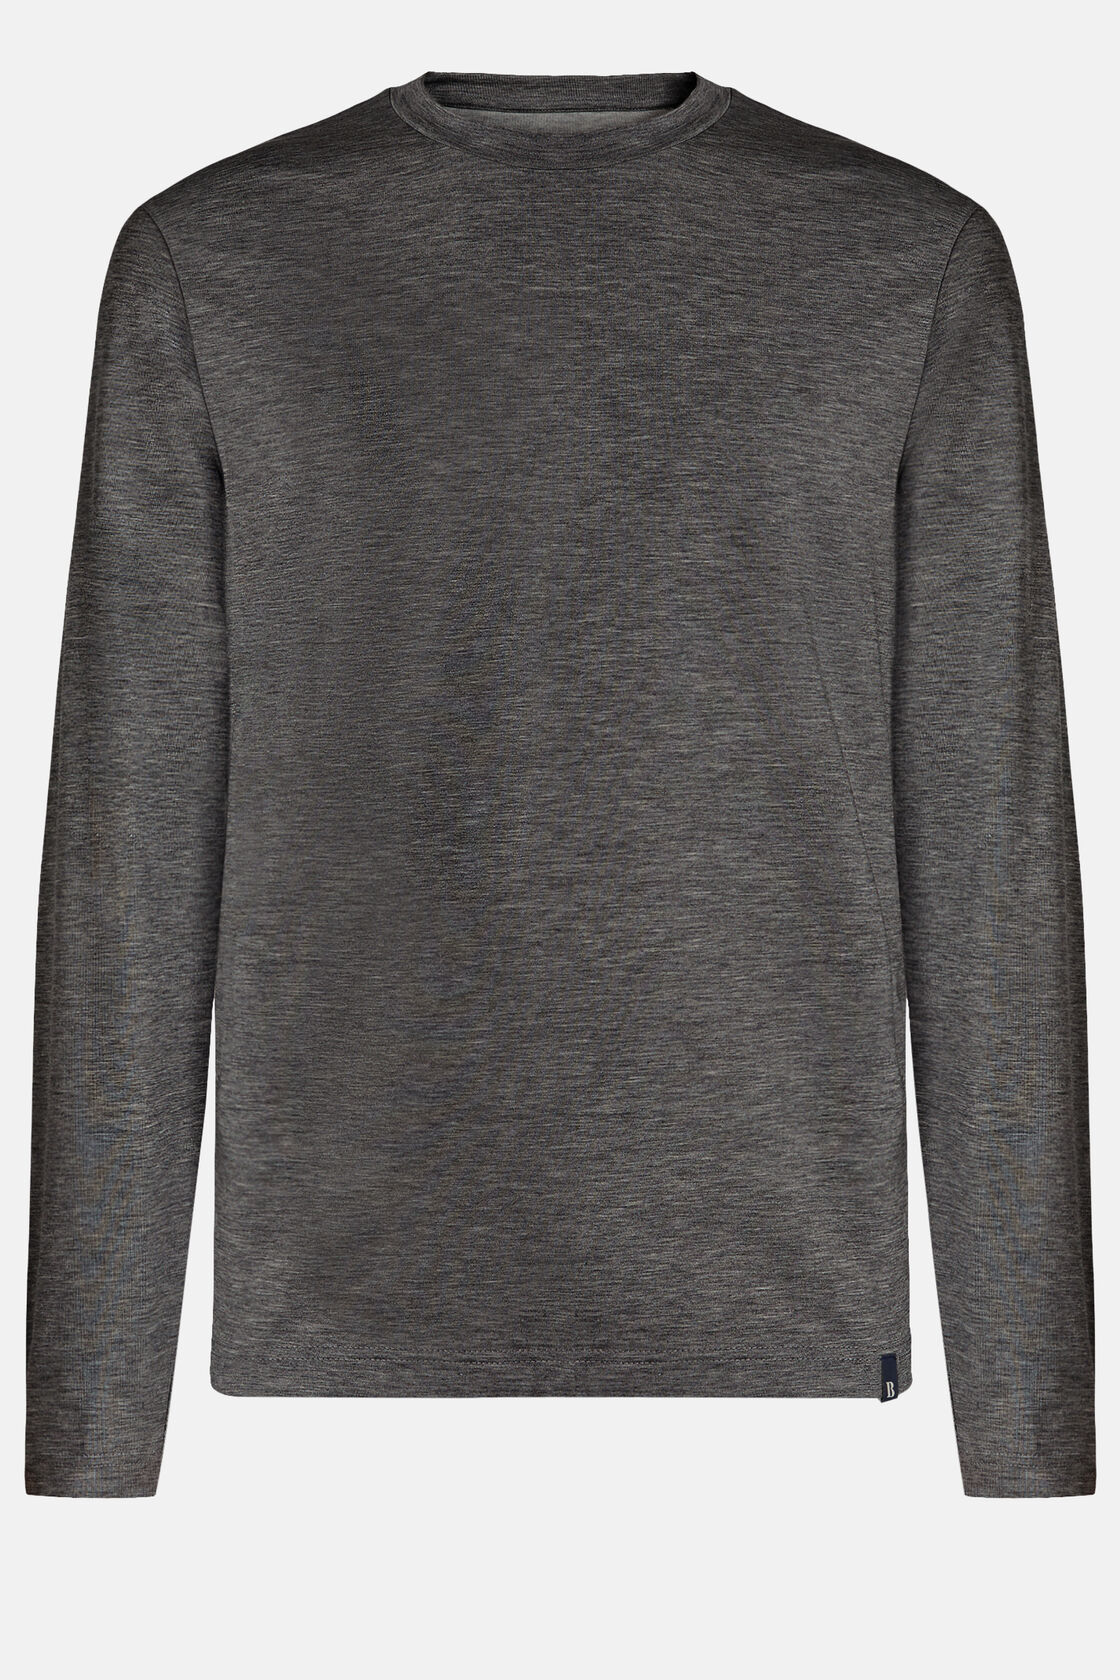 Long-Sleeved Cotton/Nylon/Tencel T-Shirt, Dark Grey, hi-res